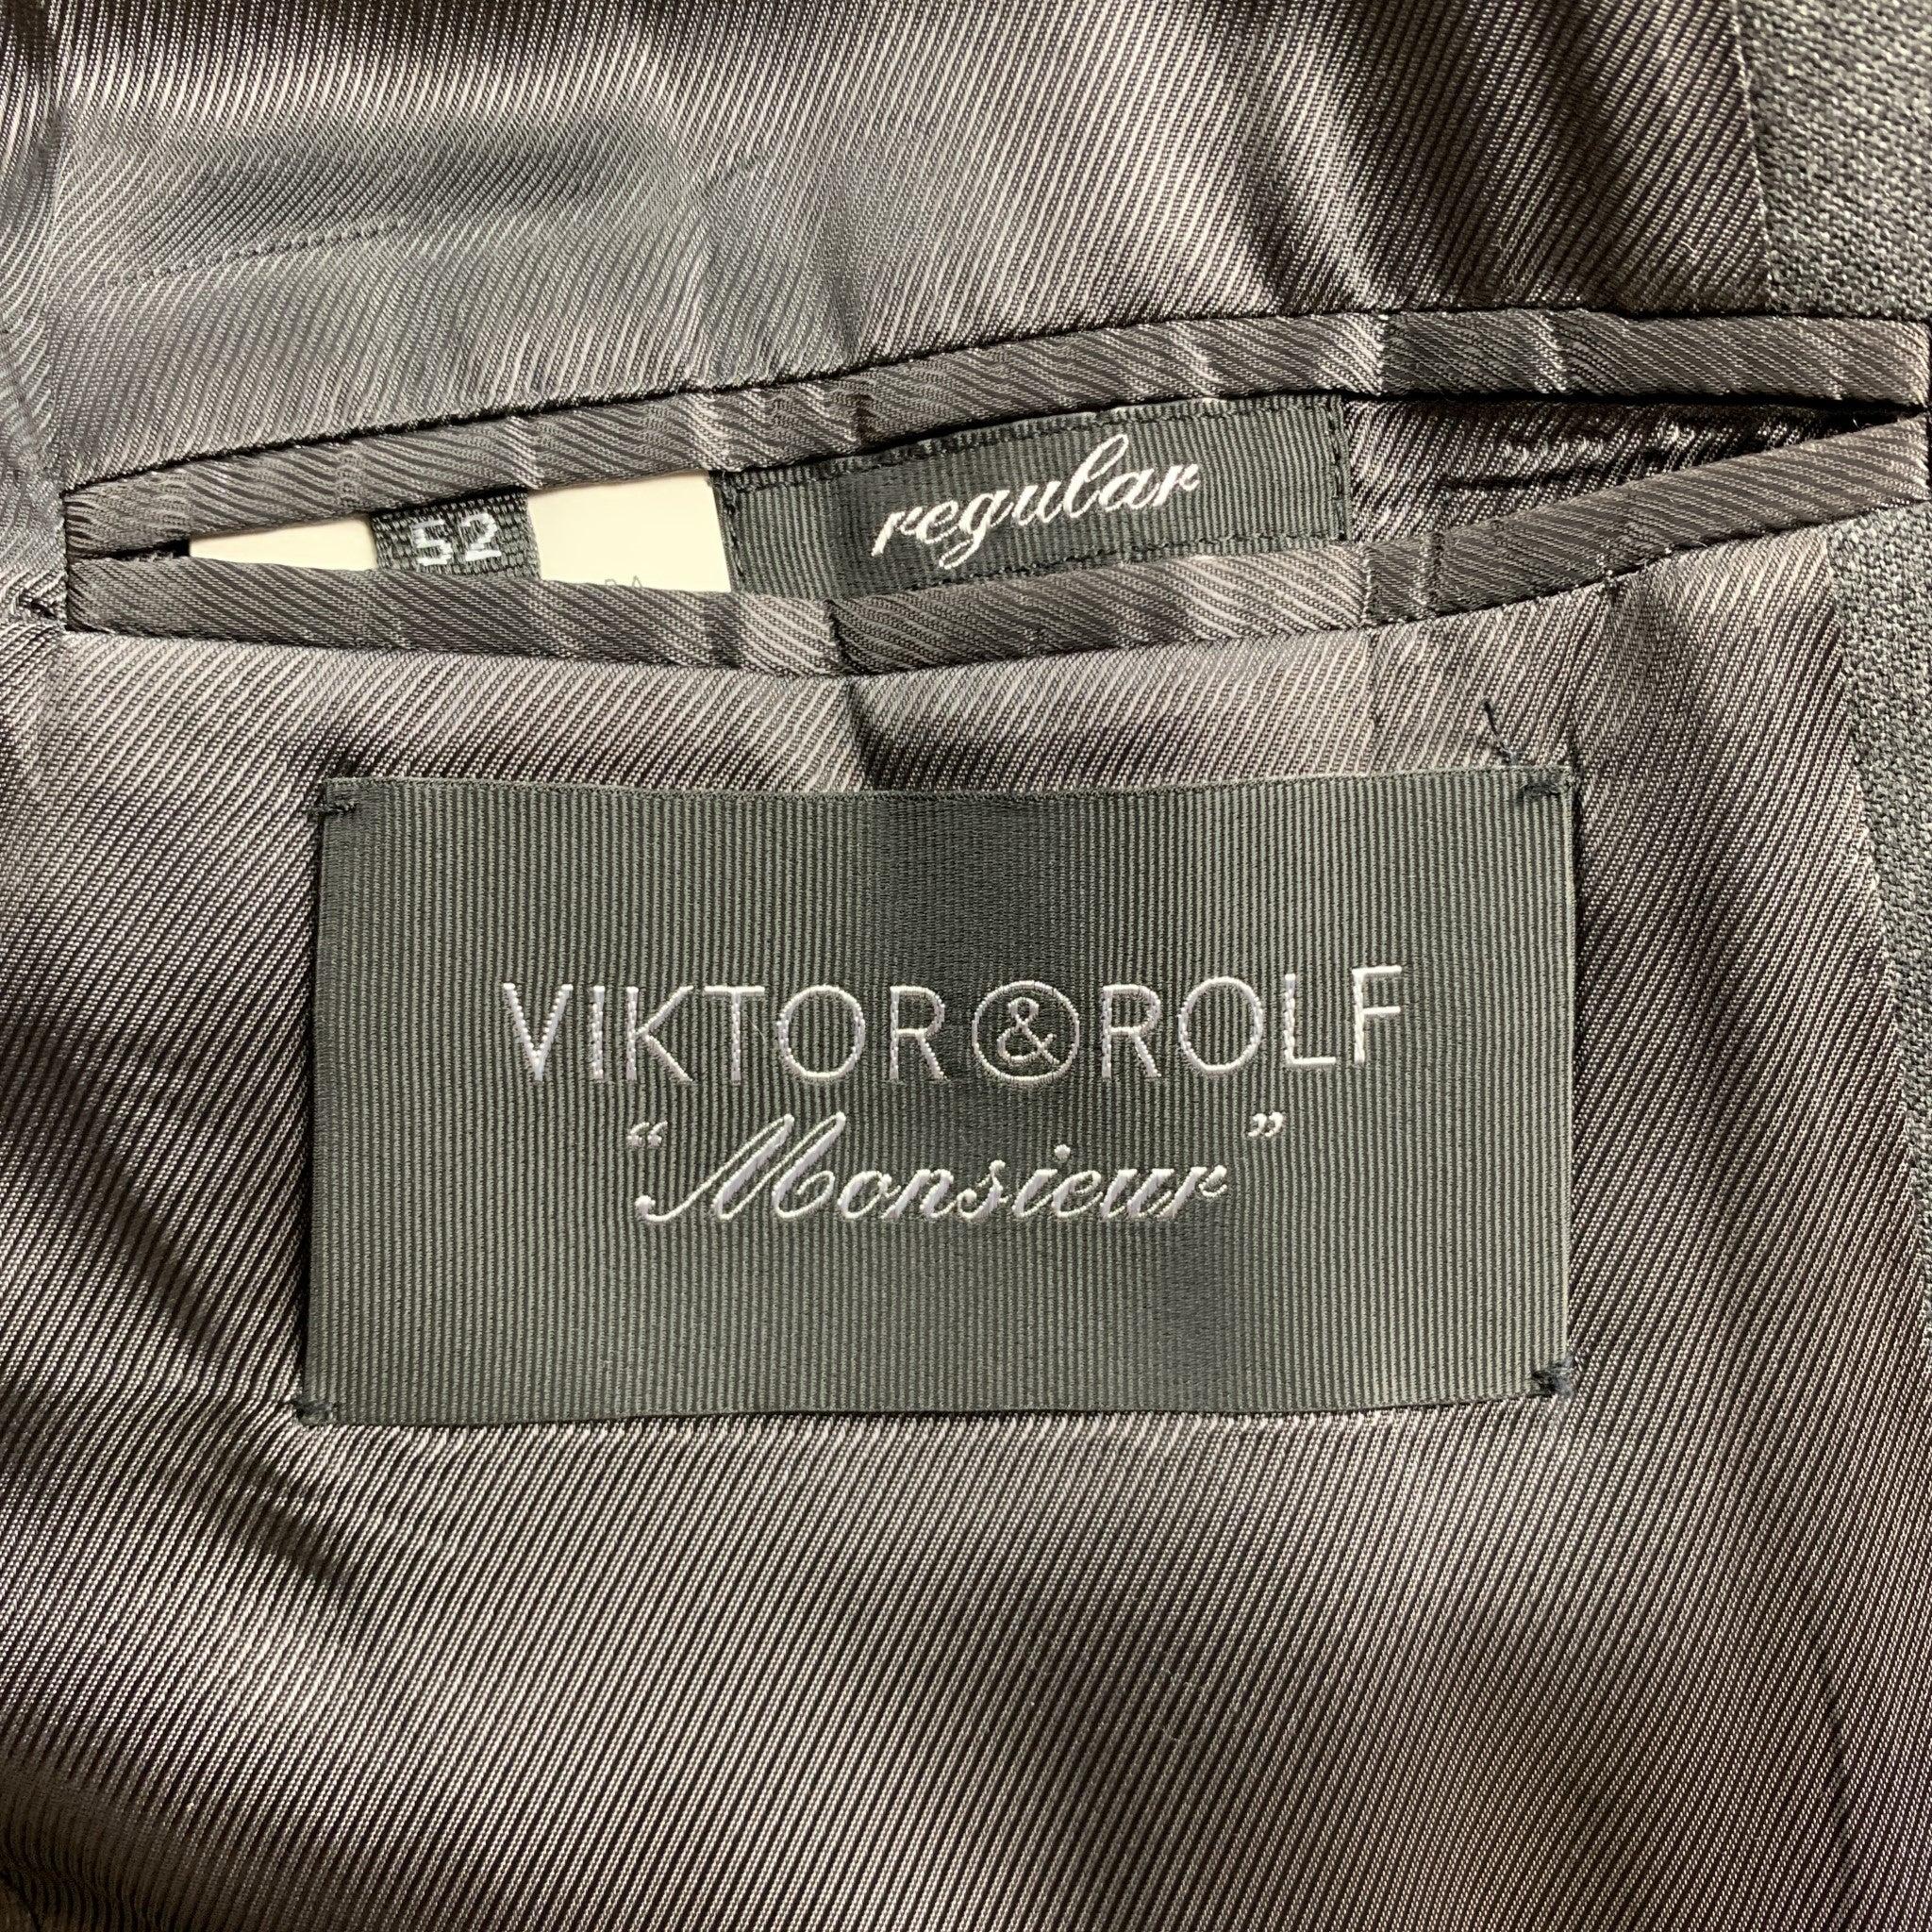 VIKTOR & ROLF Size 42  Dark Gray Wool Regular Peak Lapel Suit For Sale 3